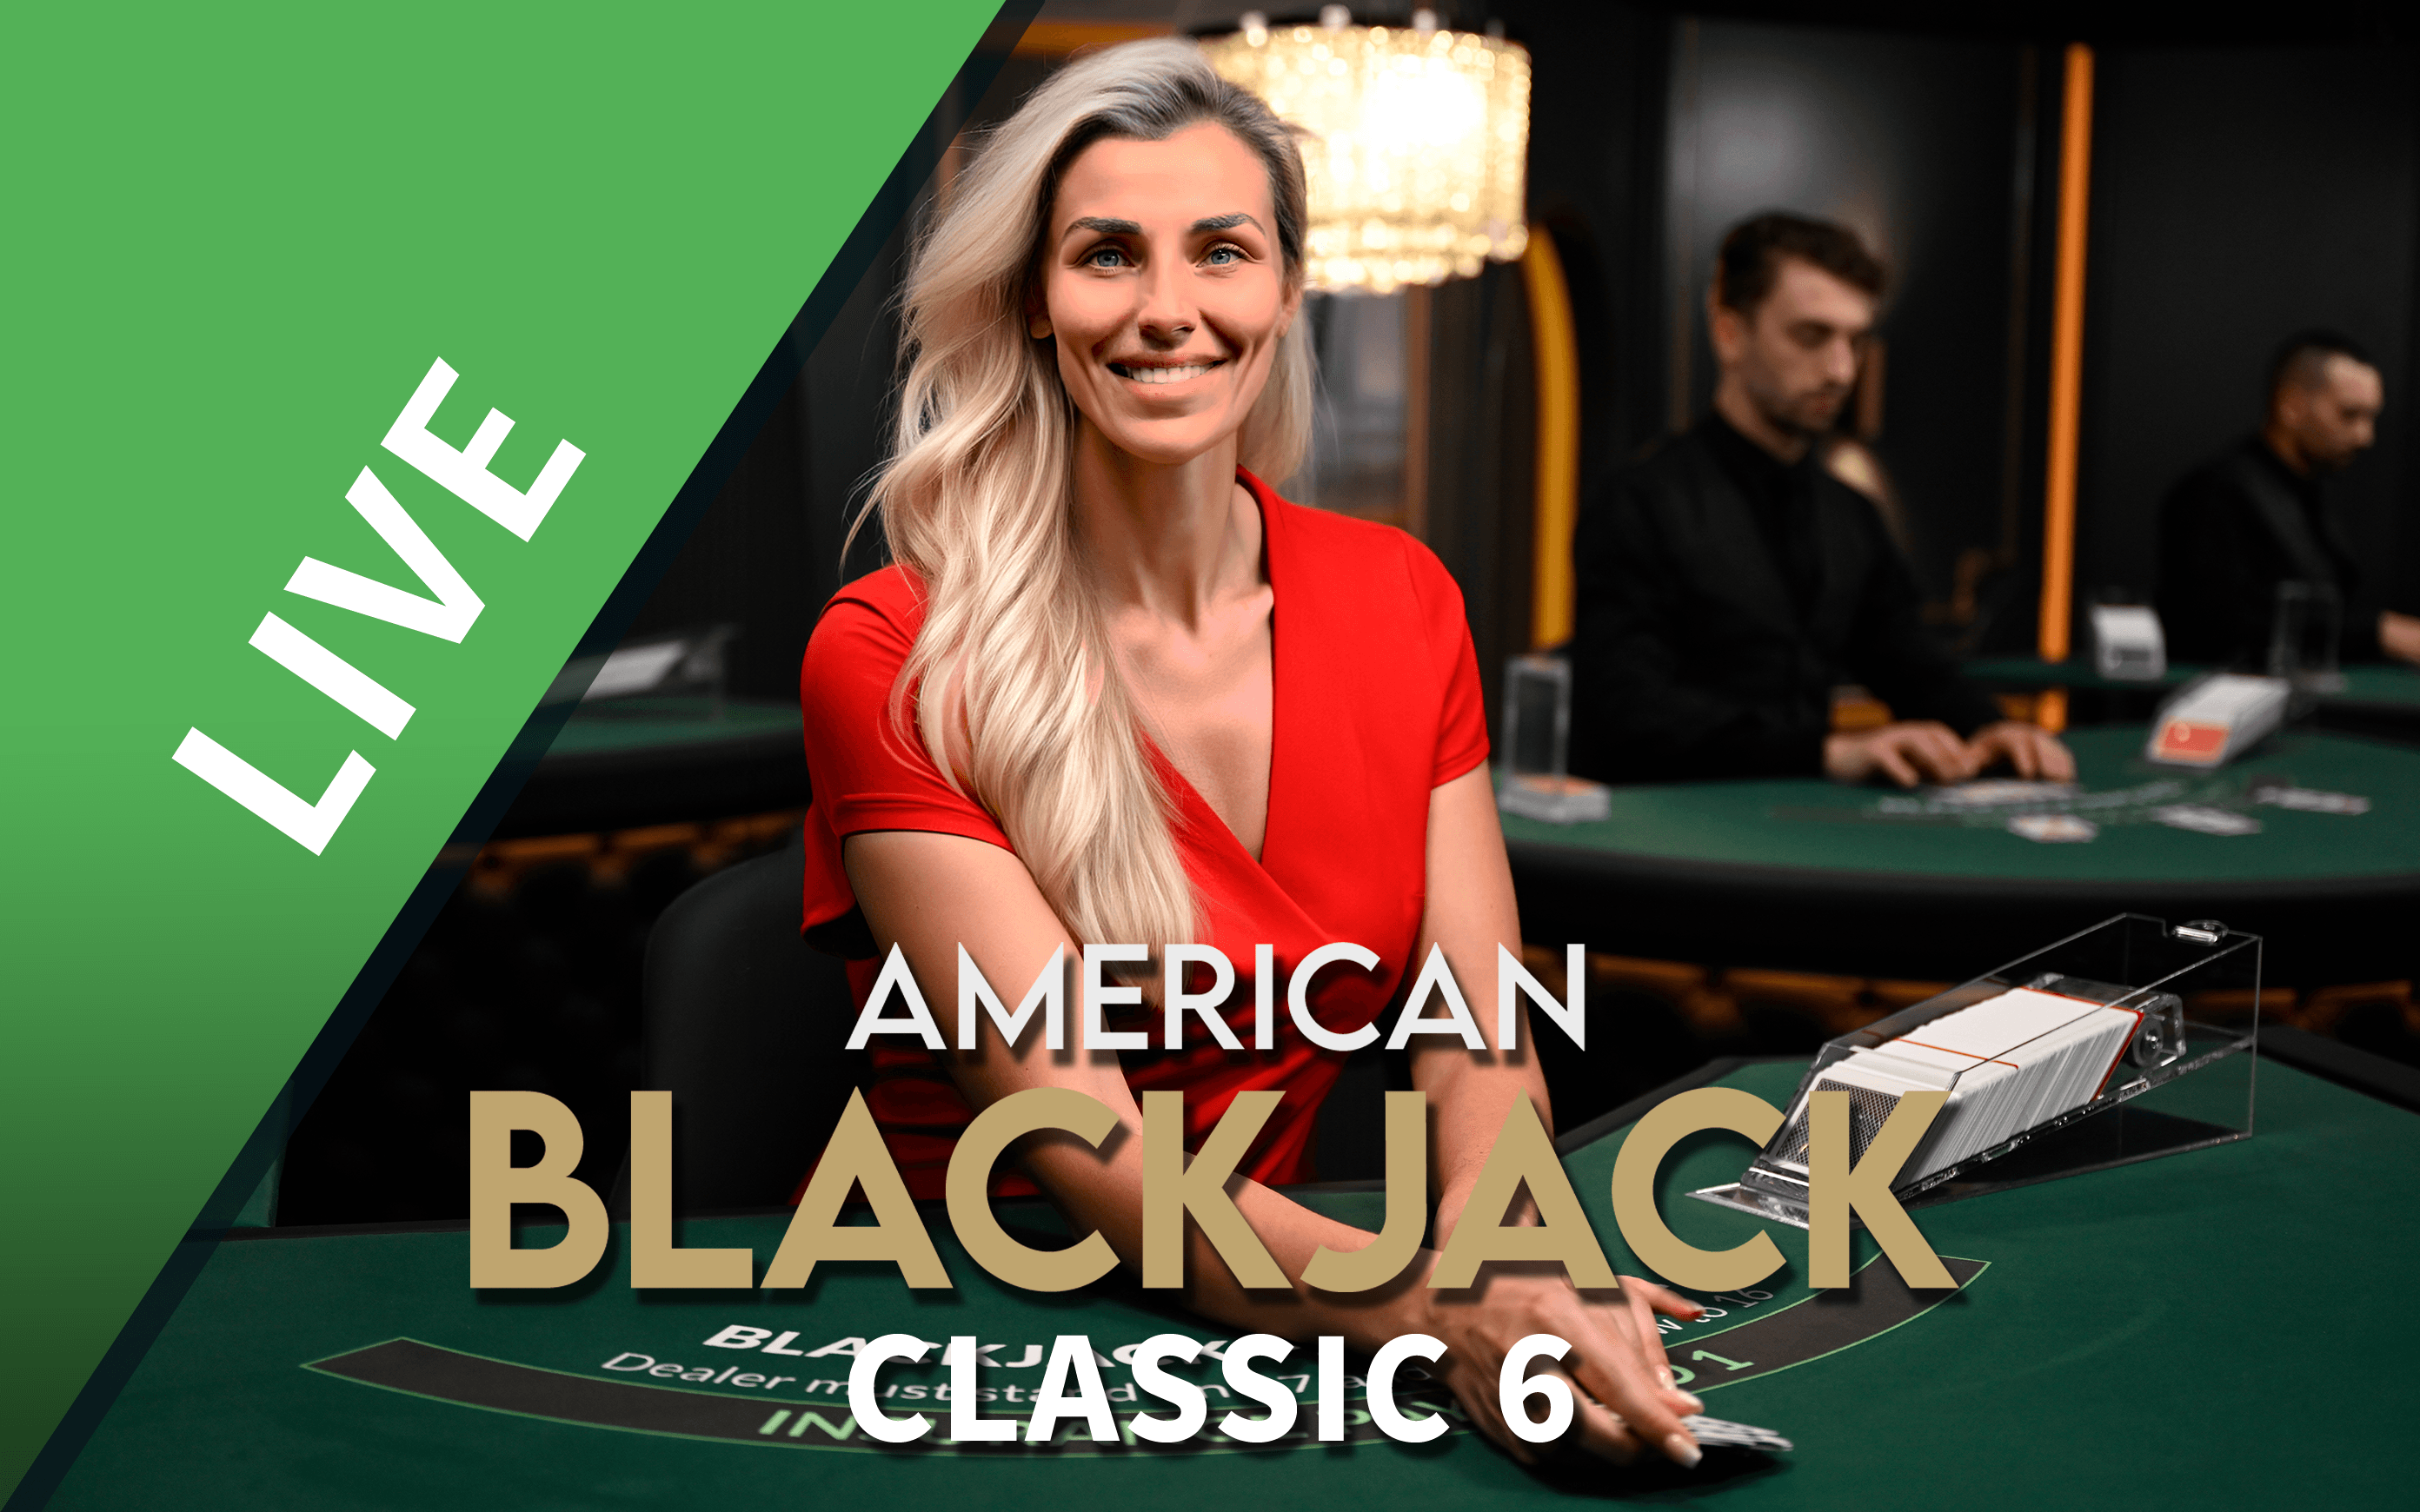 Play Blackjack Classic 6 on Starcasino.be online casino